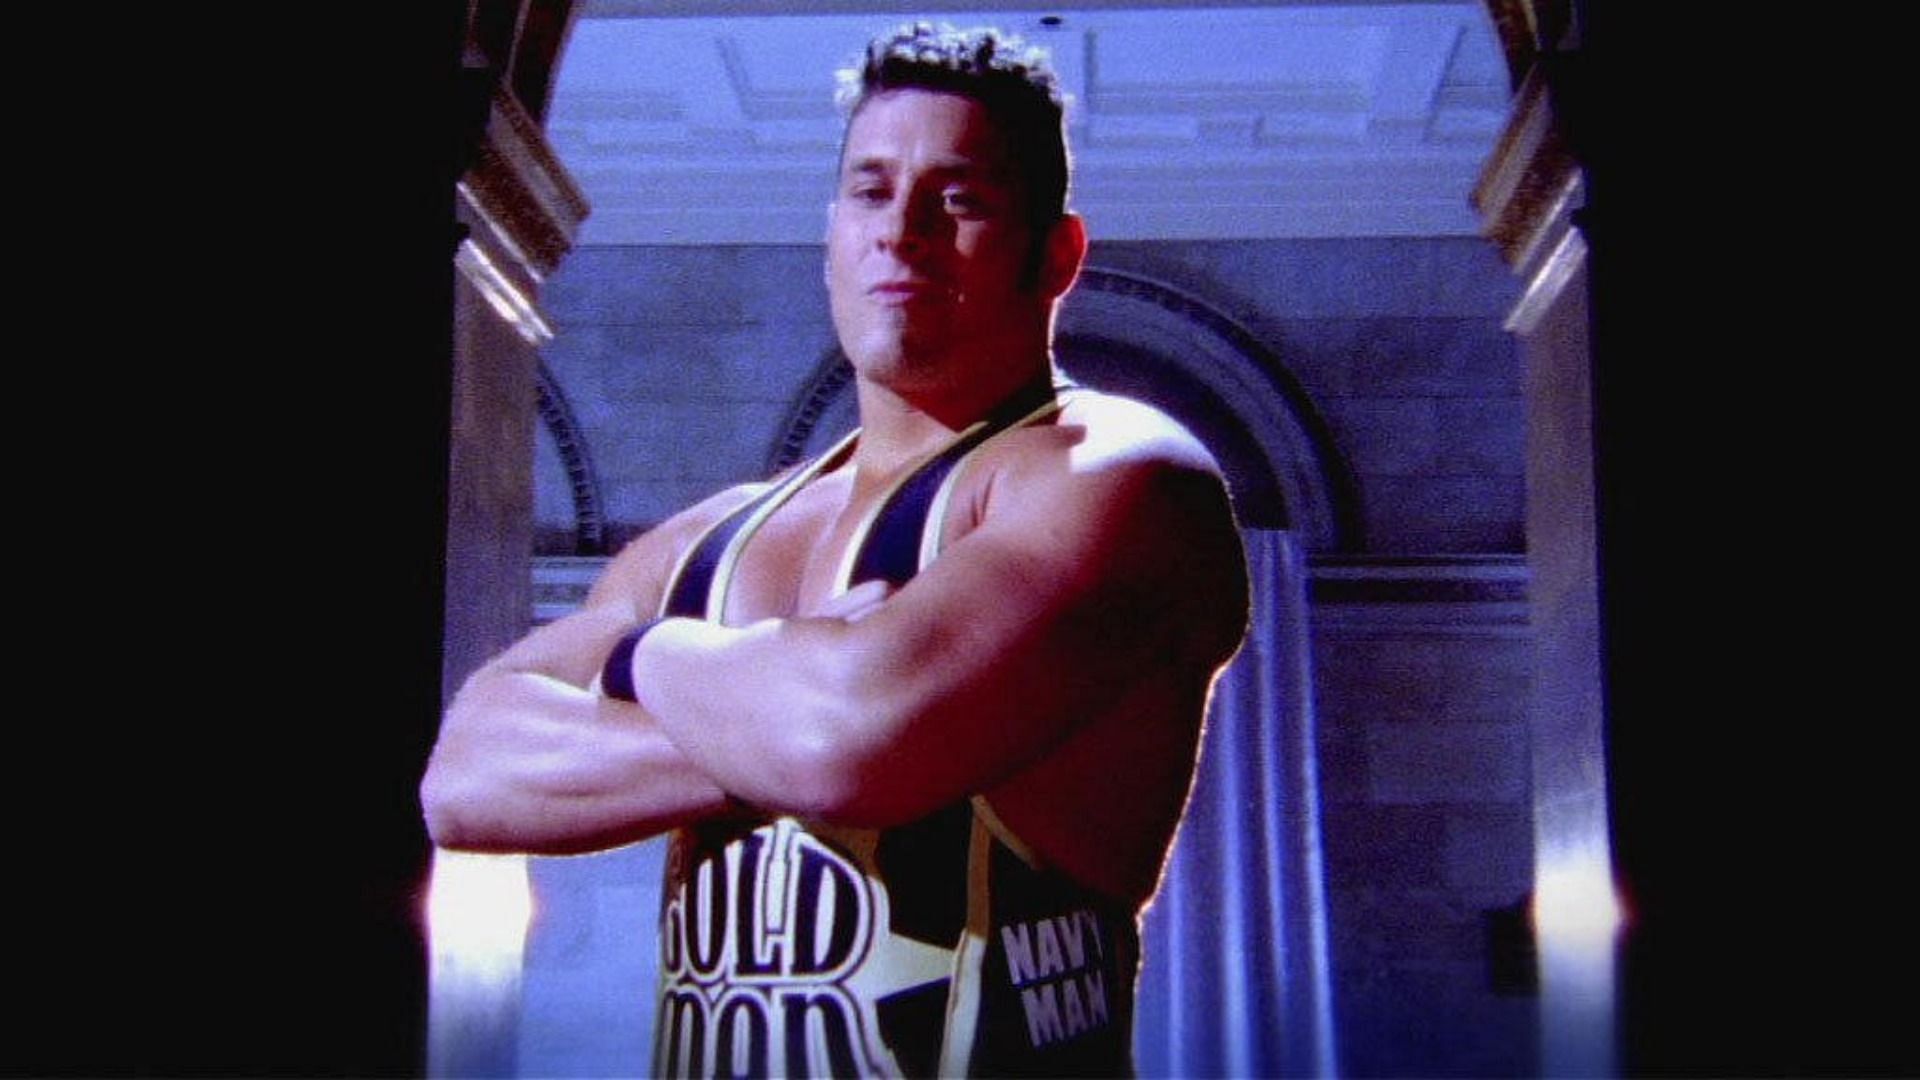 Colt Cabana as Scotty Goldman in WWE